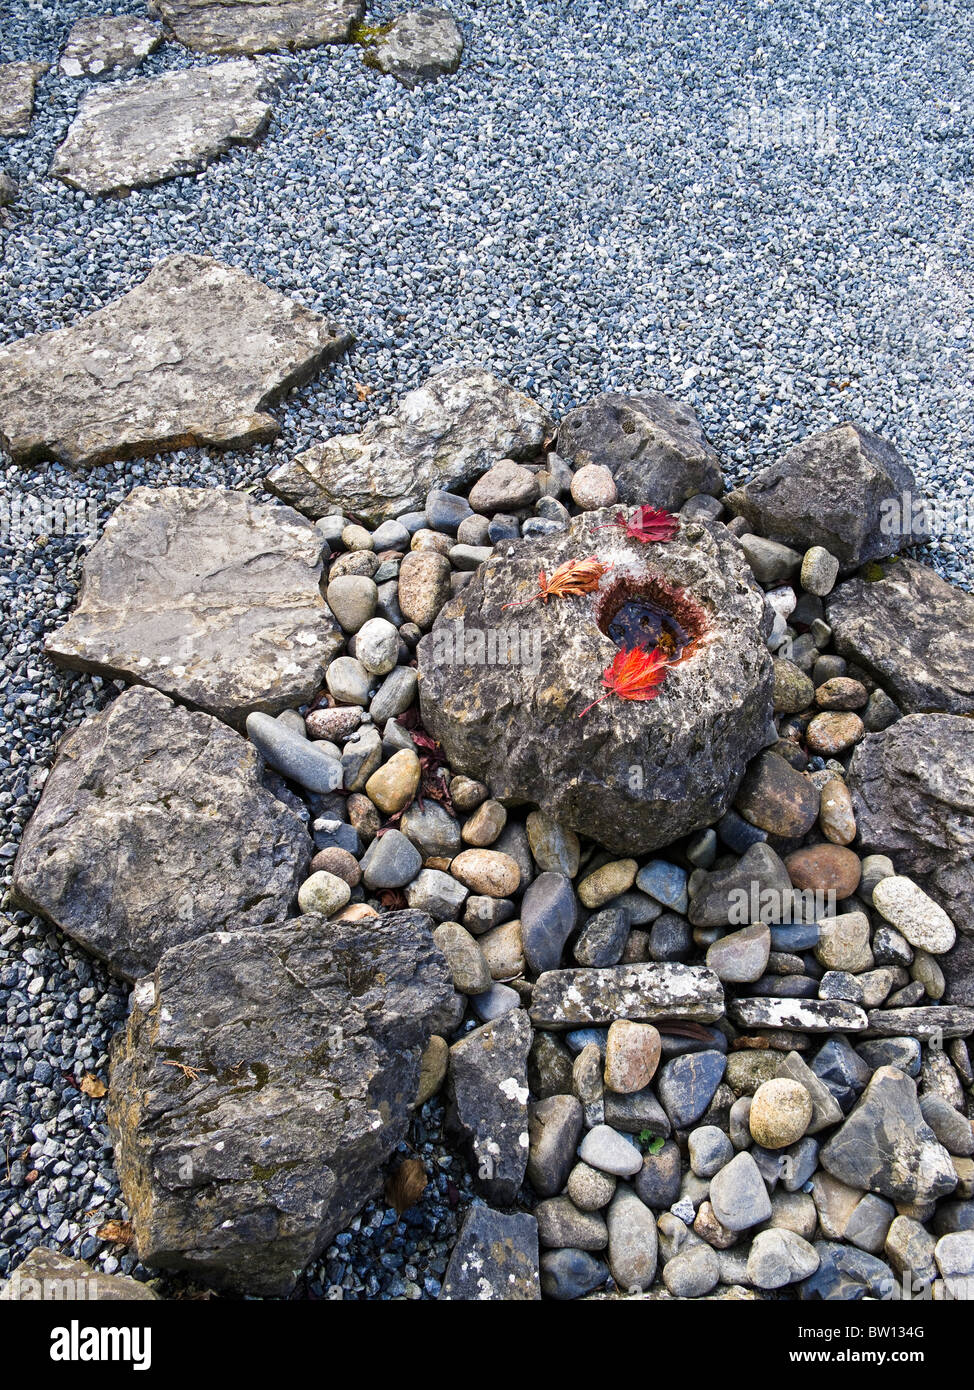 A Tsukubai Or Stone Basin In A Japanese Garden With Pebbles Stone